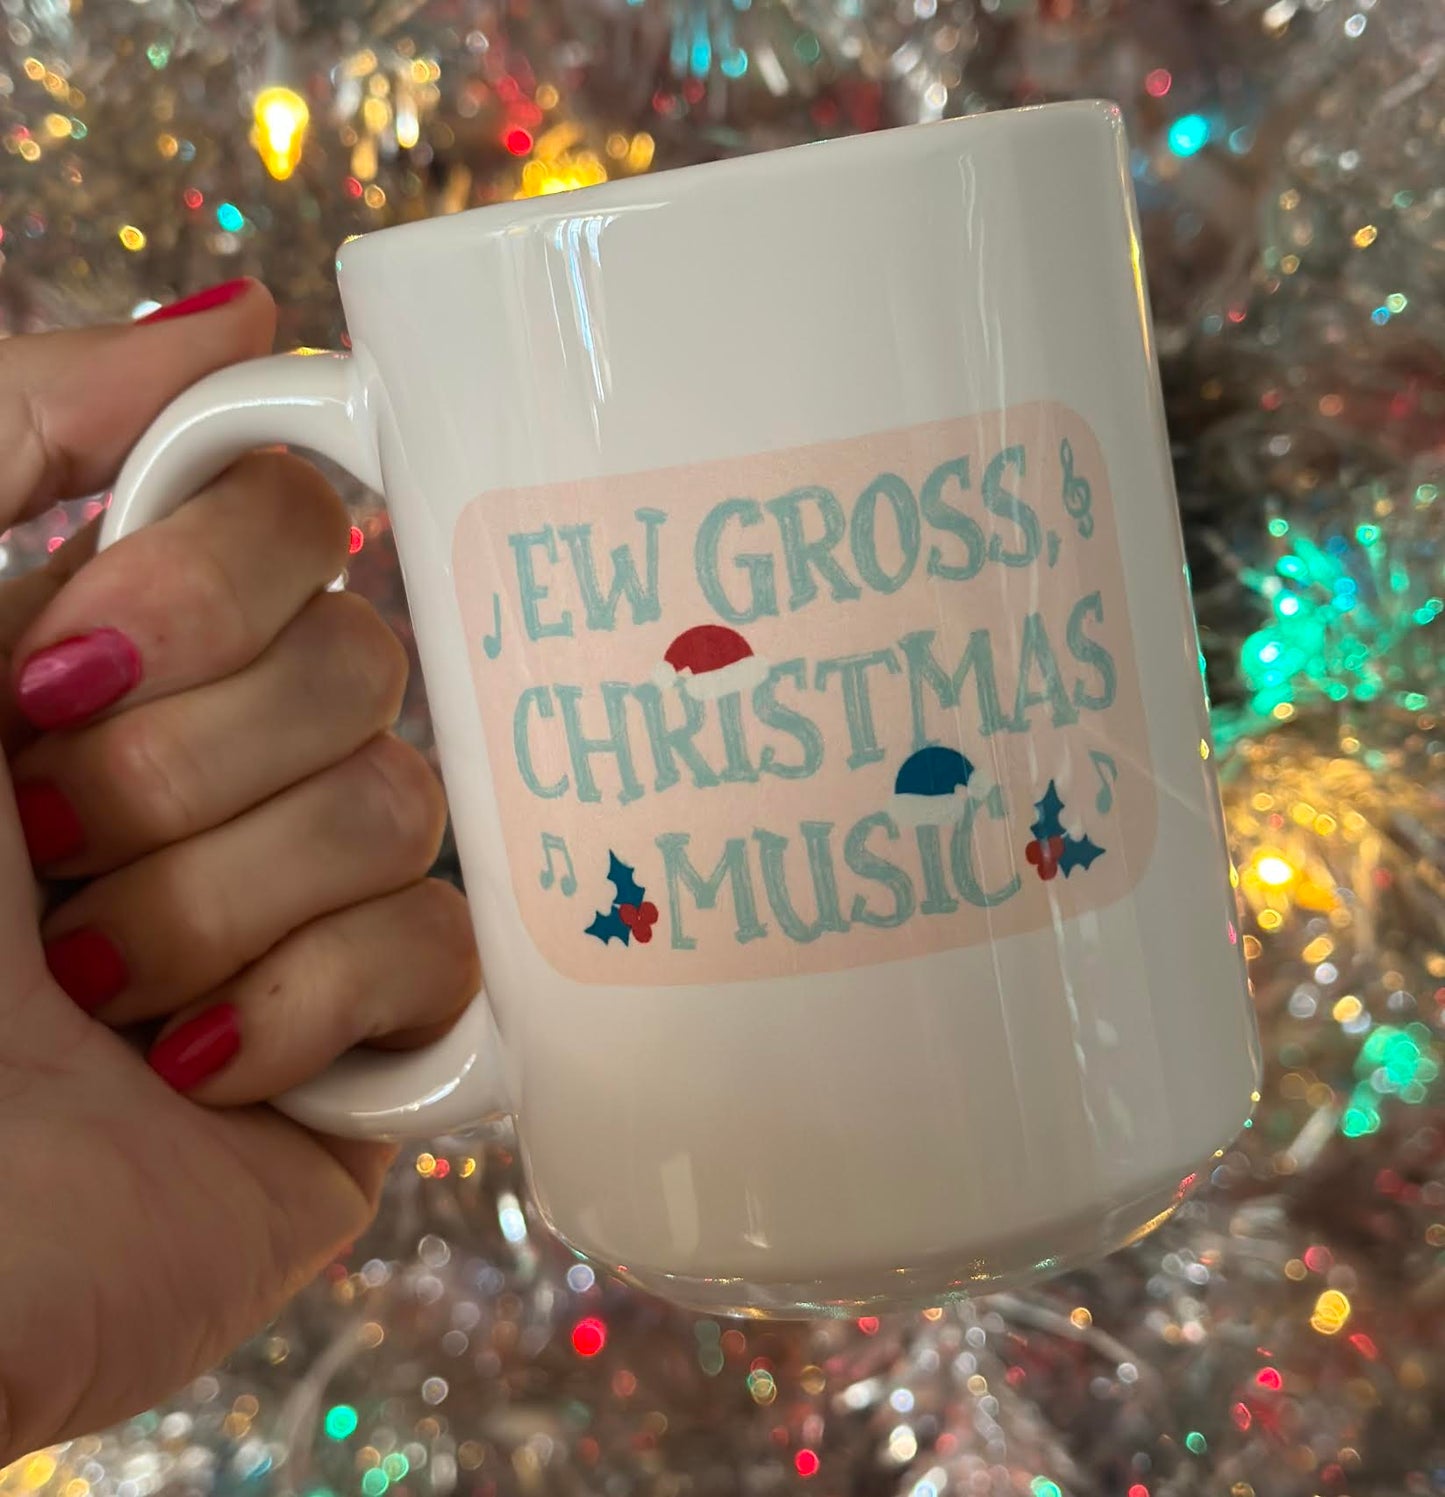 Load image into Gallery viewer, Ew Gross Christmas Music 15 oz Mug
